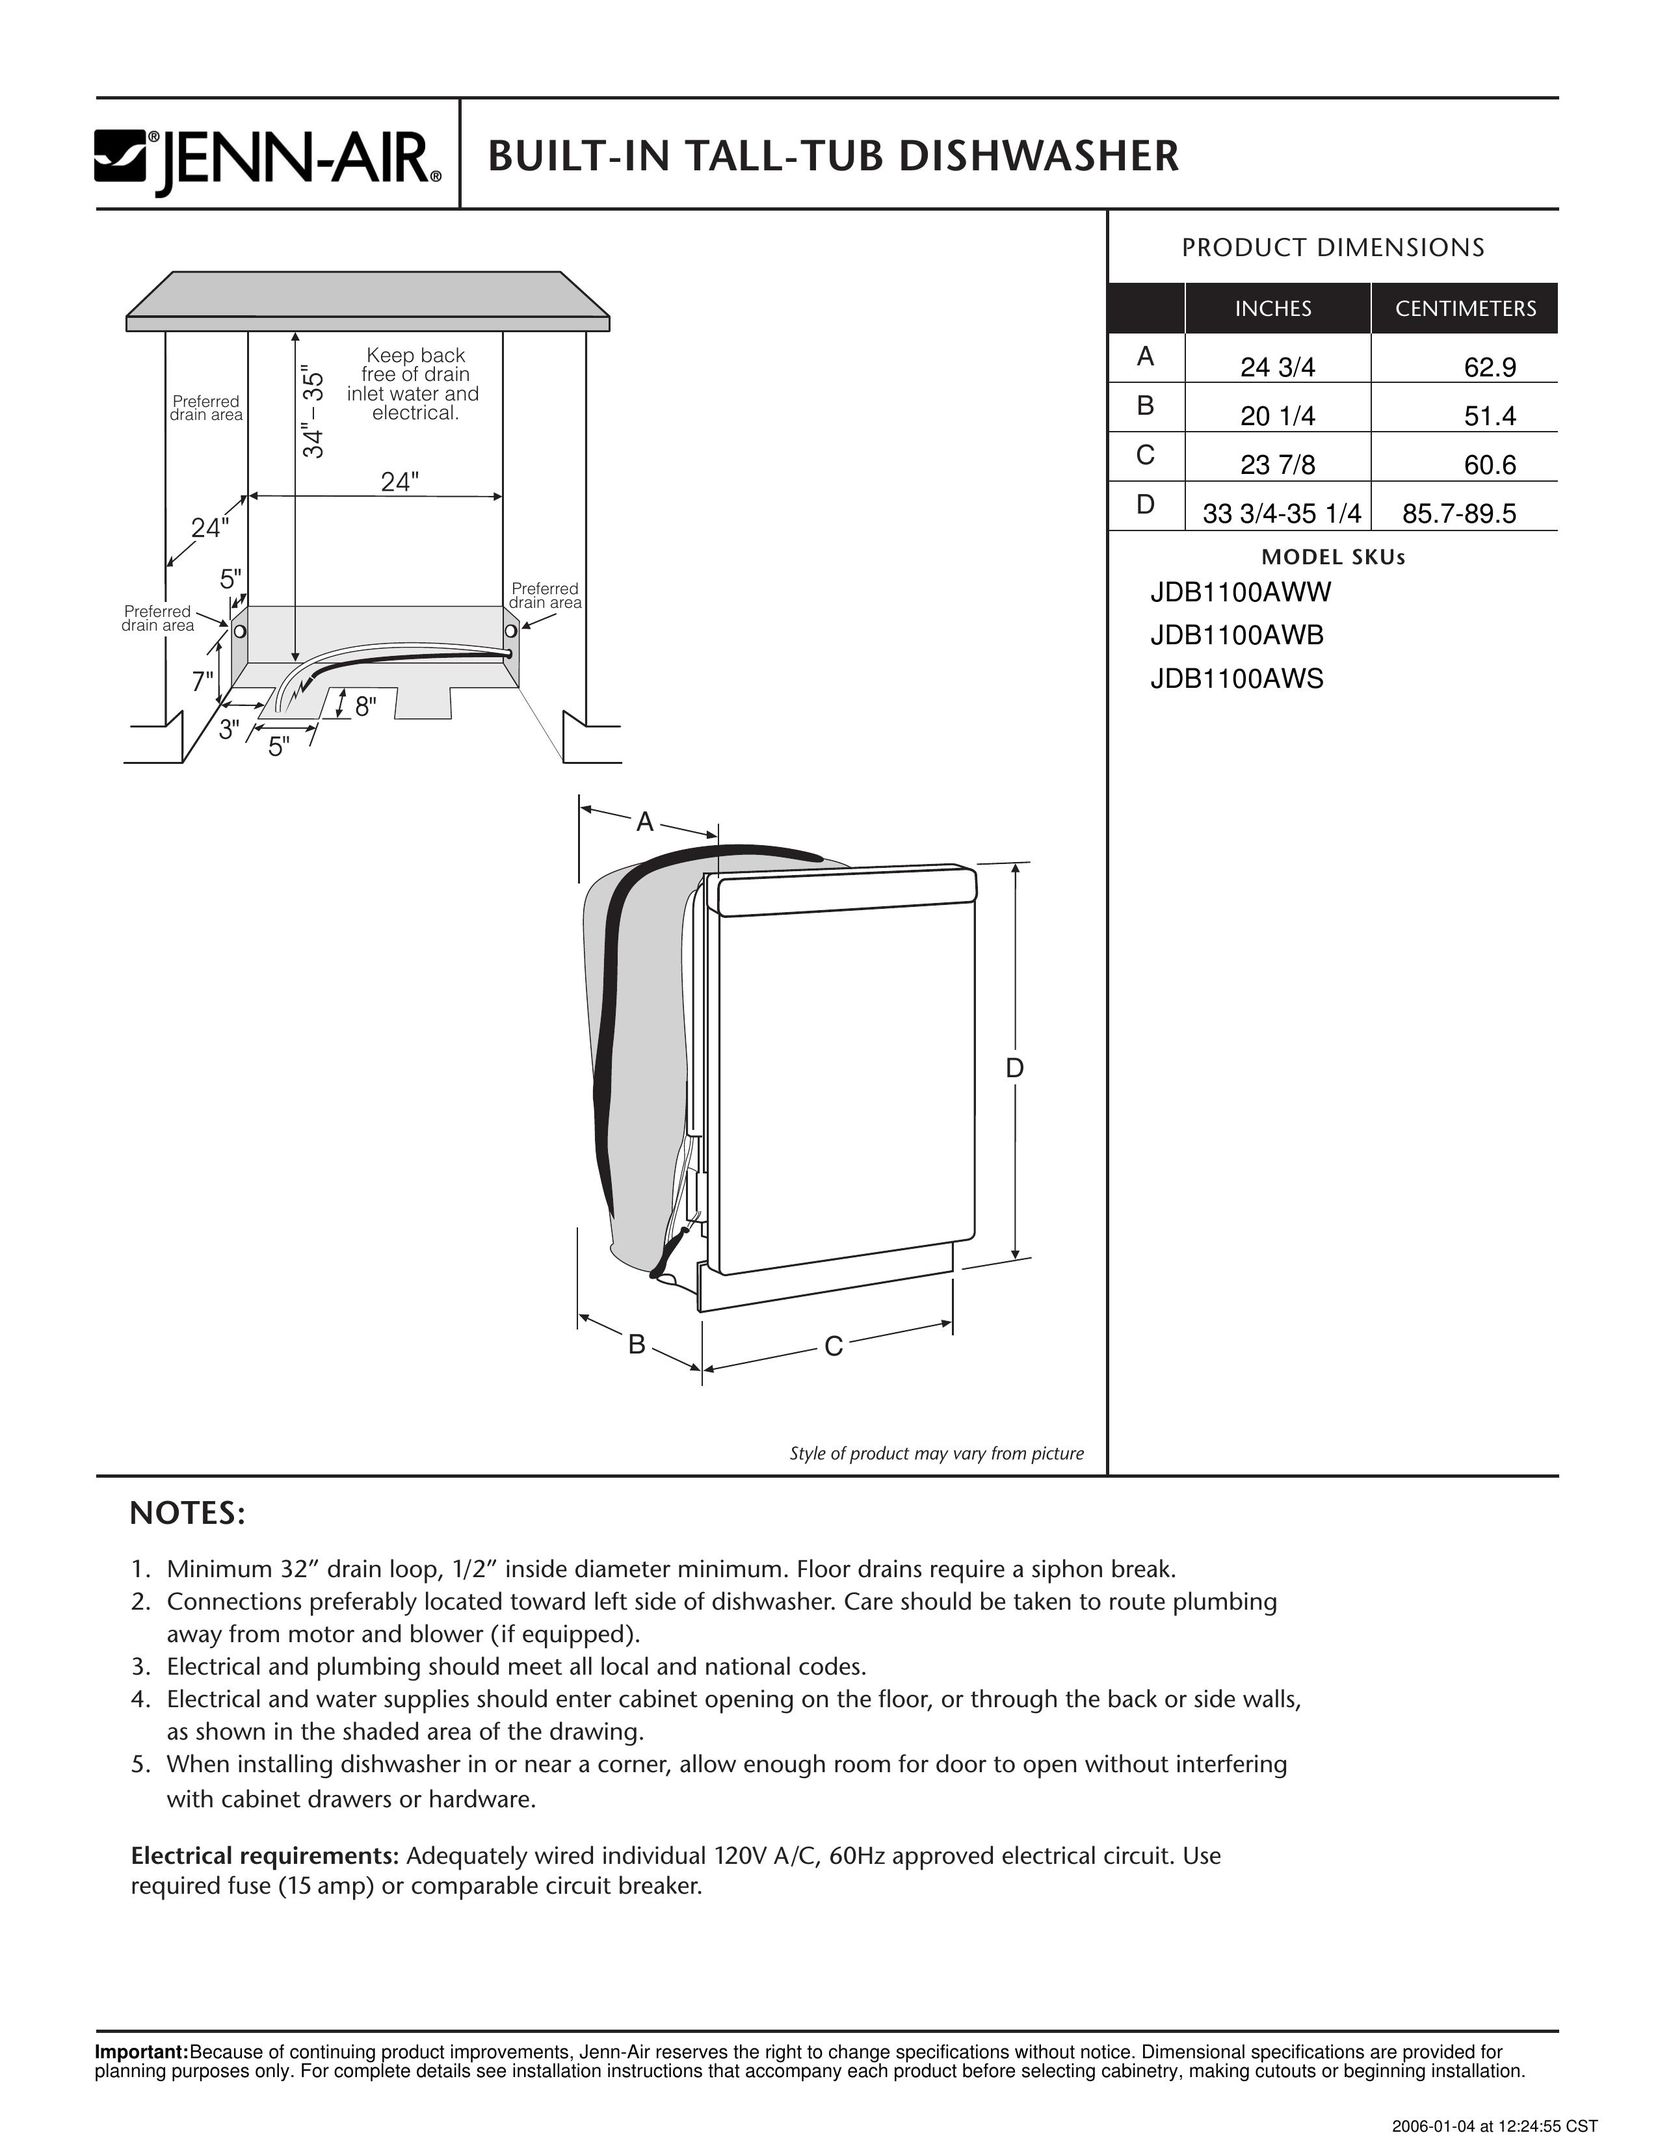 Jenn-Air JDB1100AWB Dishwasher User Manual